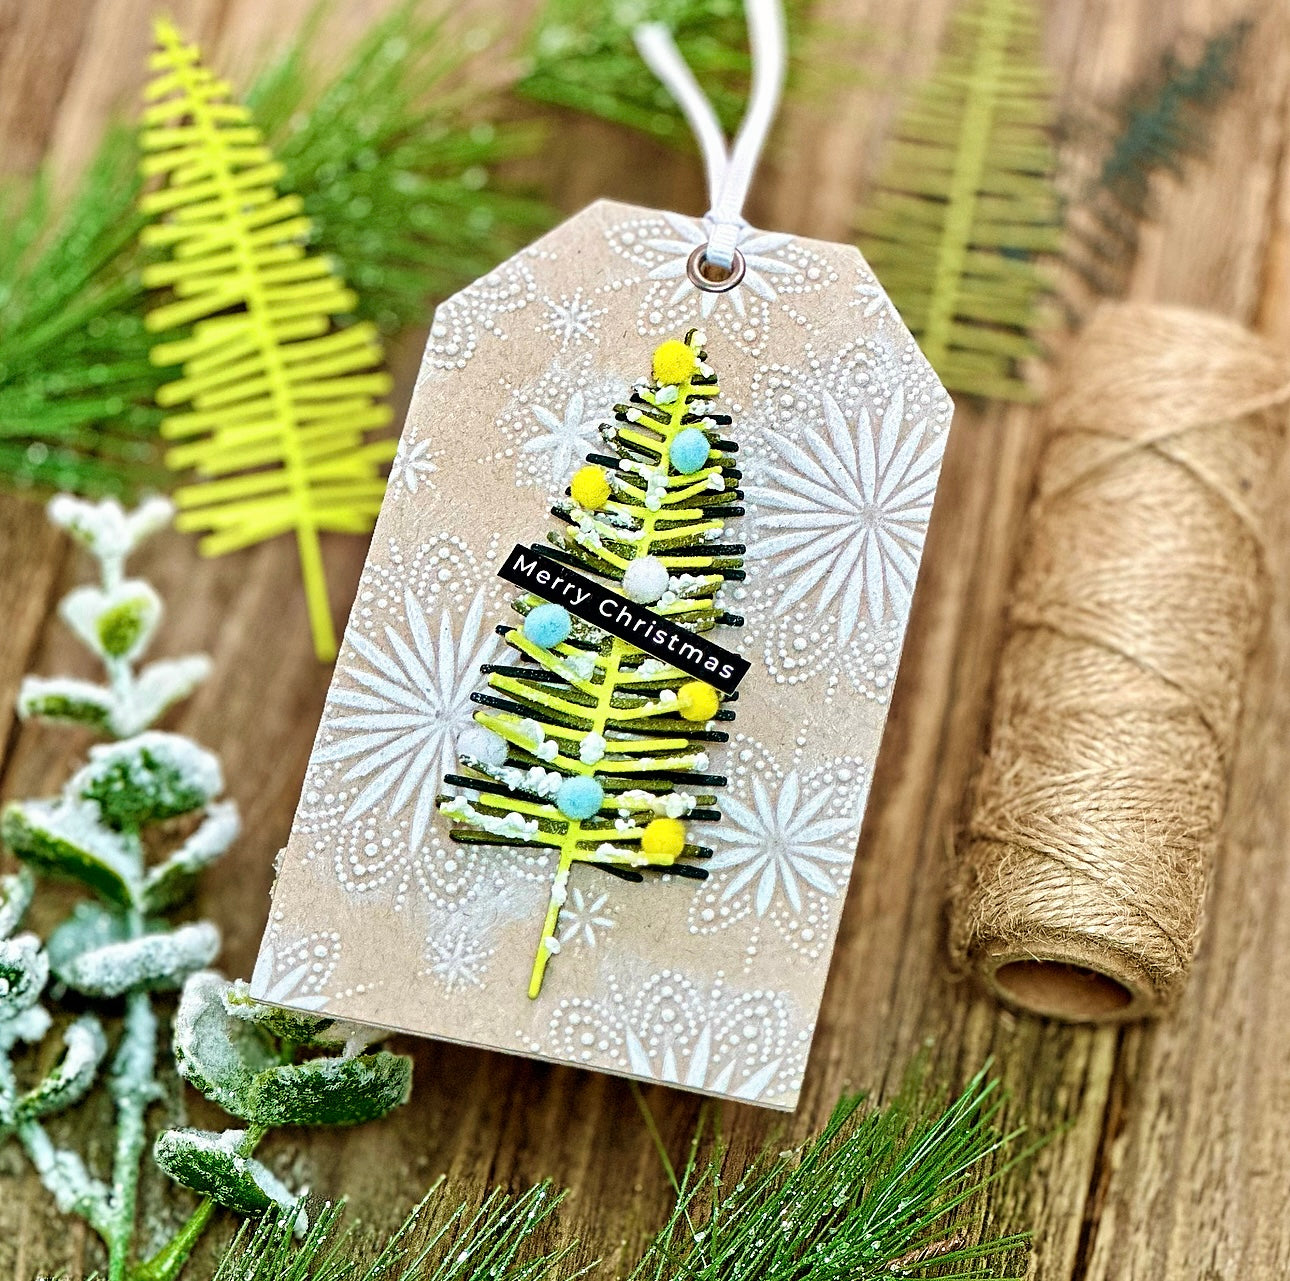 Kraft Gift Tags Joy Noel Merry Christmas Tags 